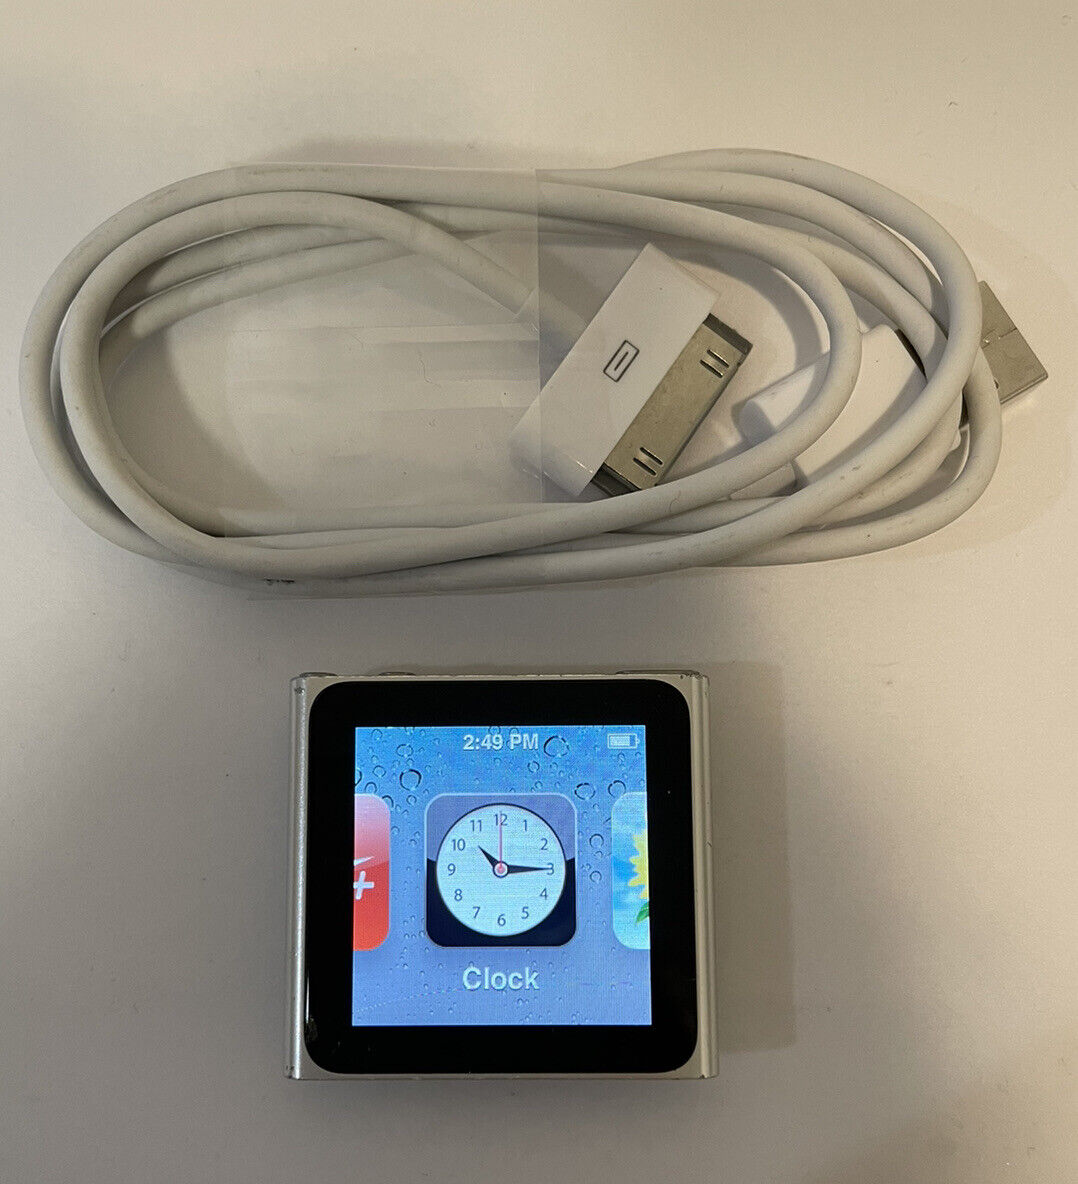 Apple iPod nano 6th Generation Silver (16 GB) for sale online | eBay